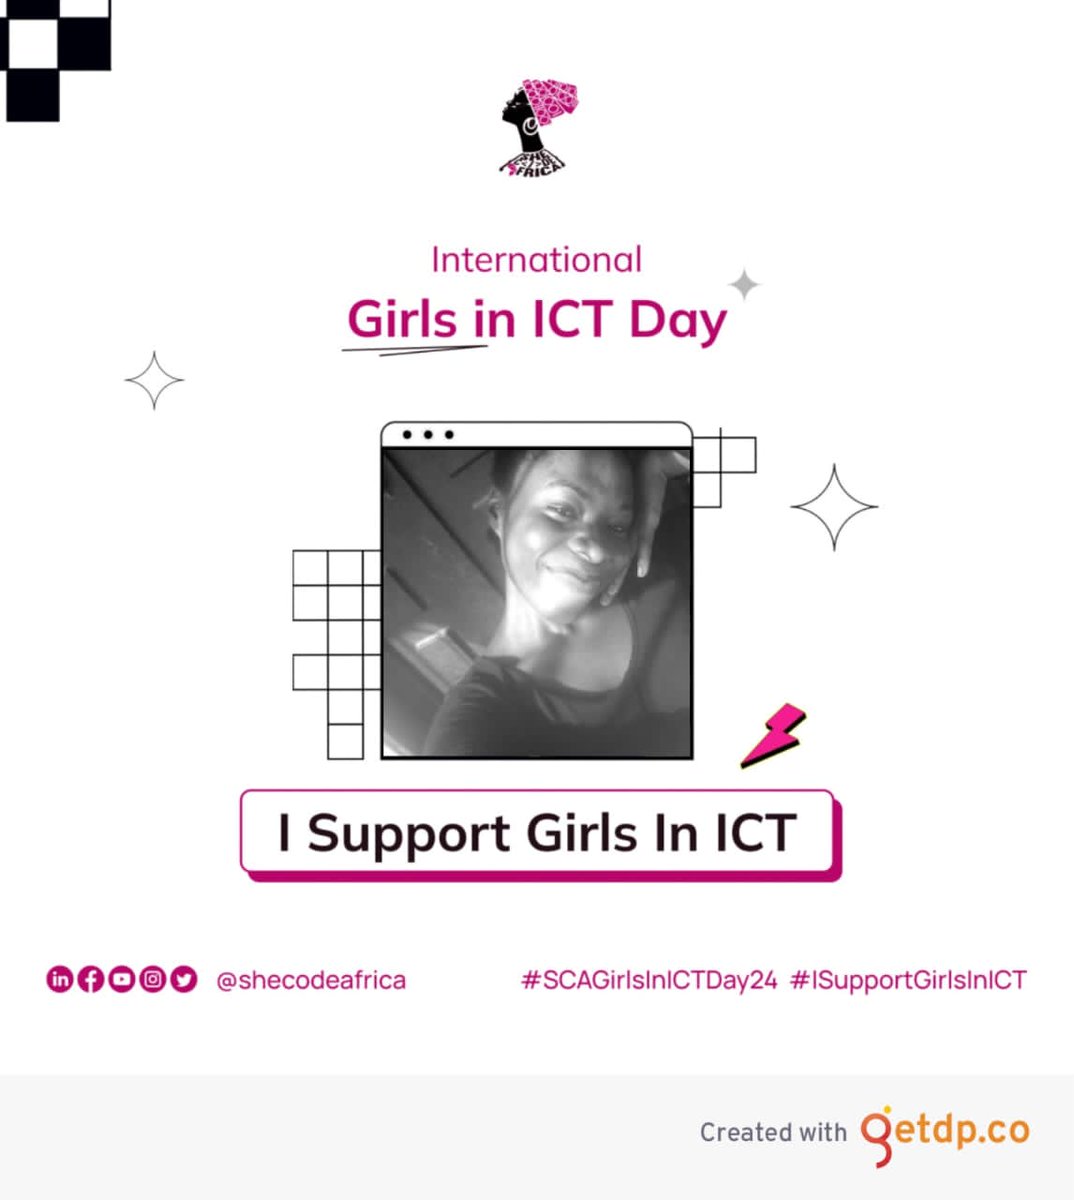 Happy International Girl's In ICT Dayyy!💜

#shecodeafrica
#SCAGirlsInICTDay24
#ISupportGirlsInICT